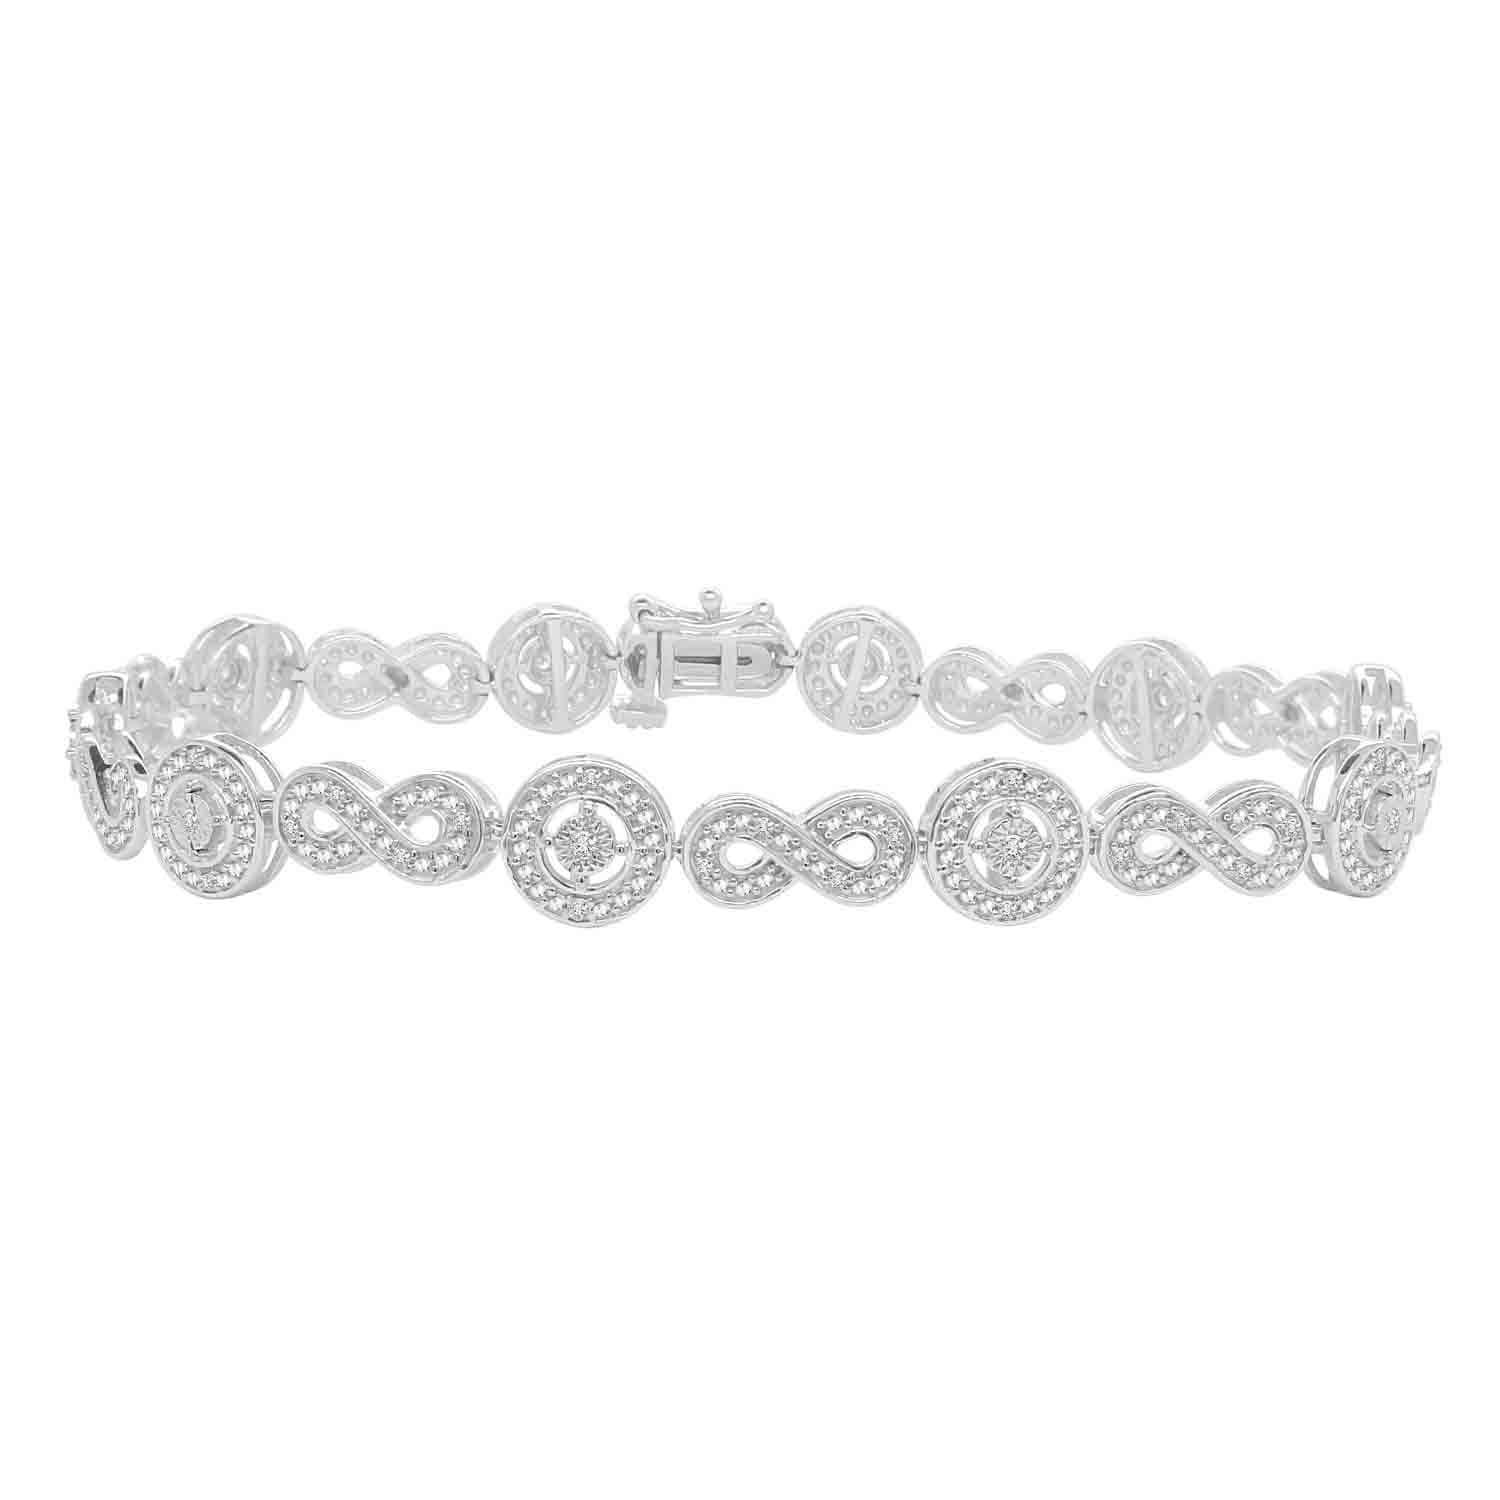 0010579_ladies-bracelet-14-ct-round-diamond-silver.jpeg